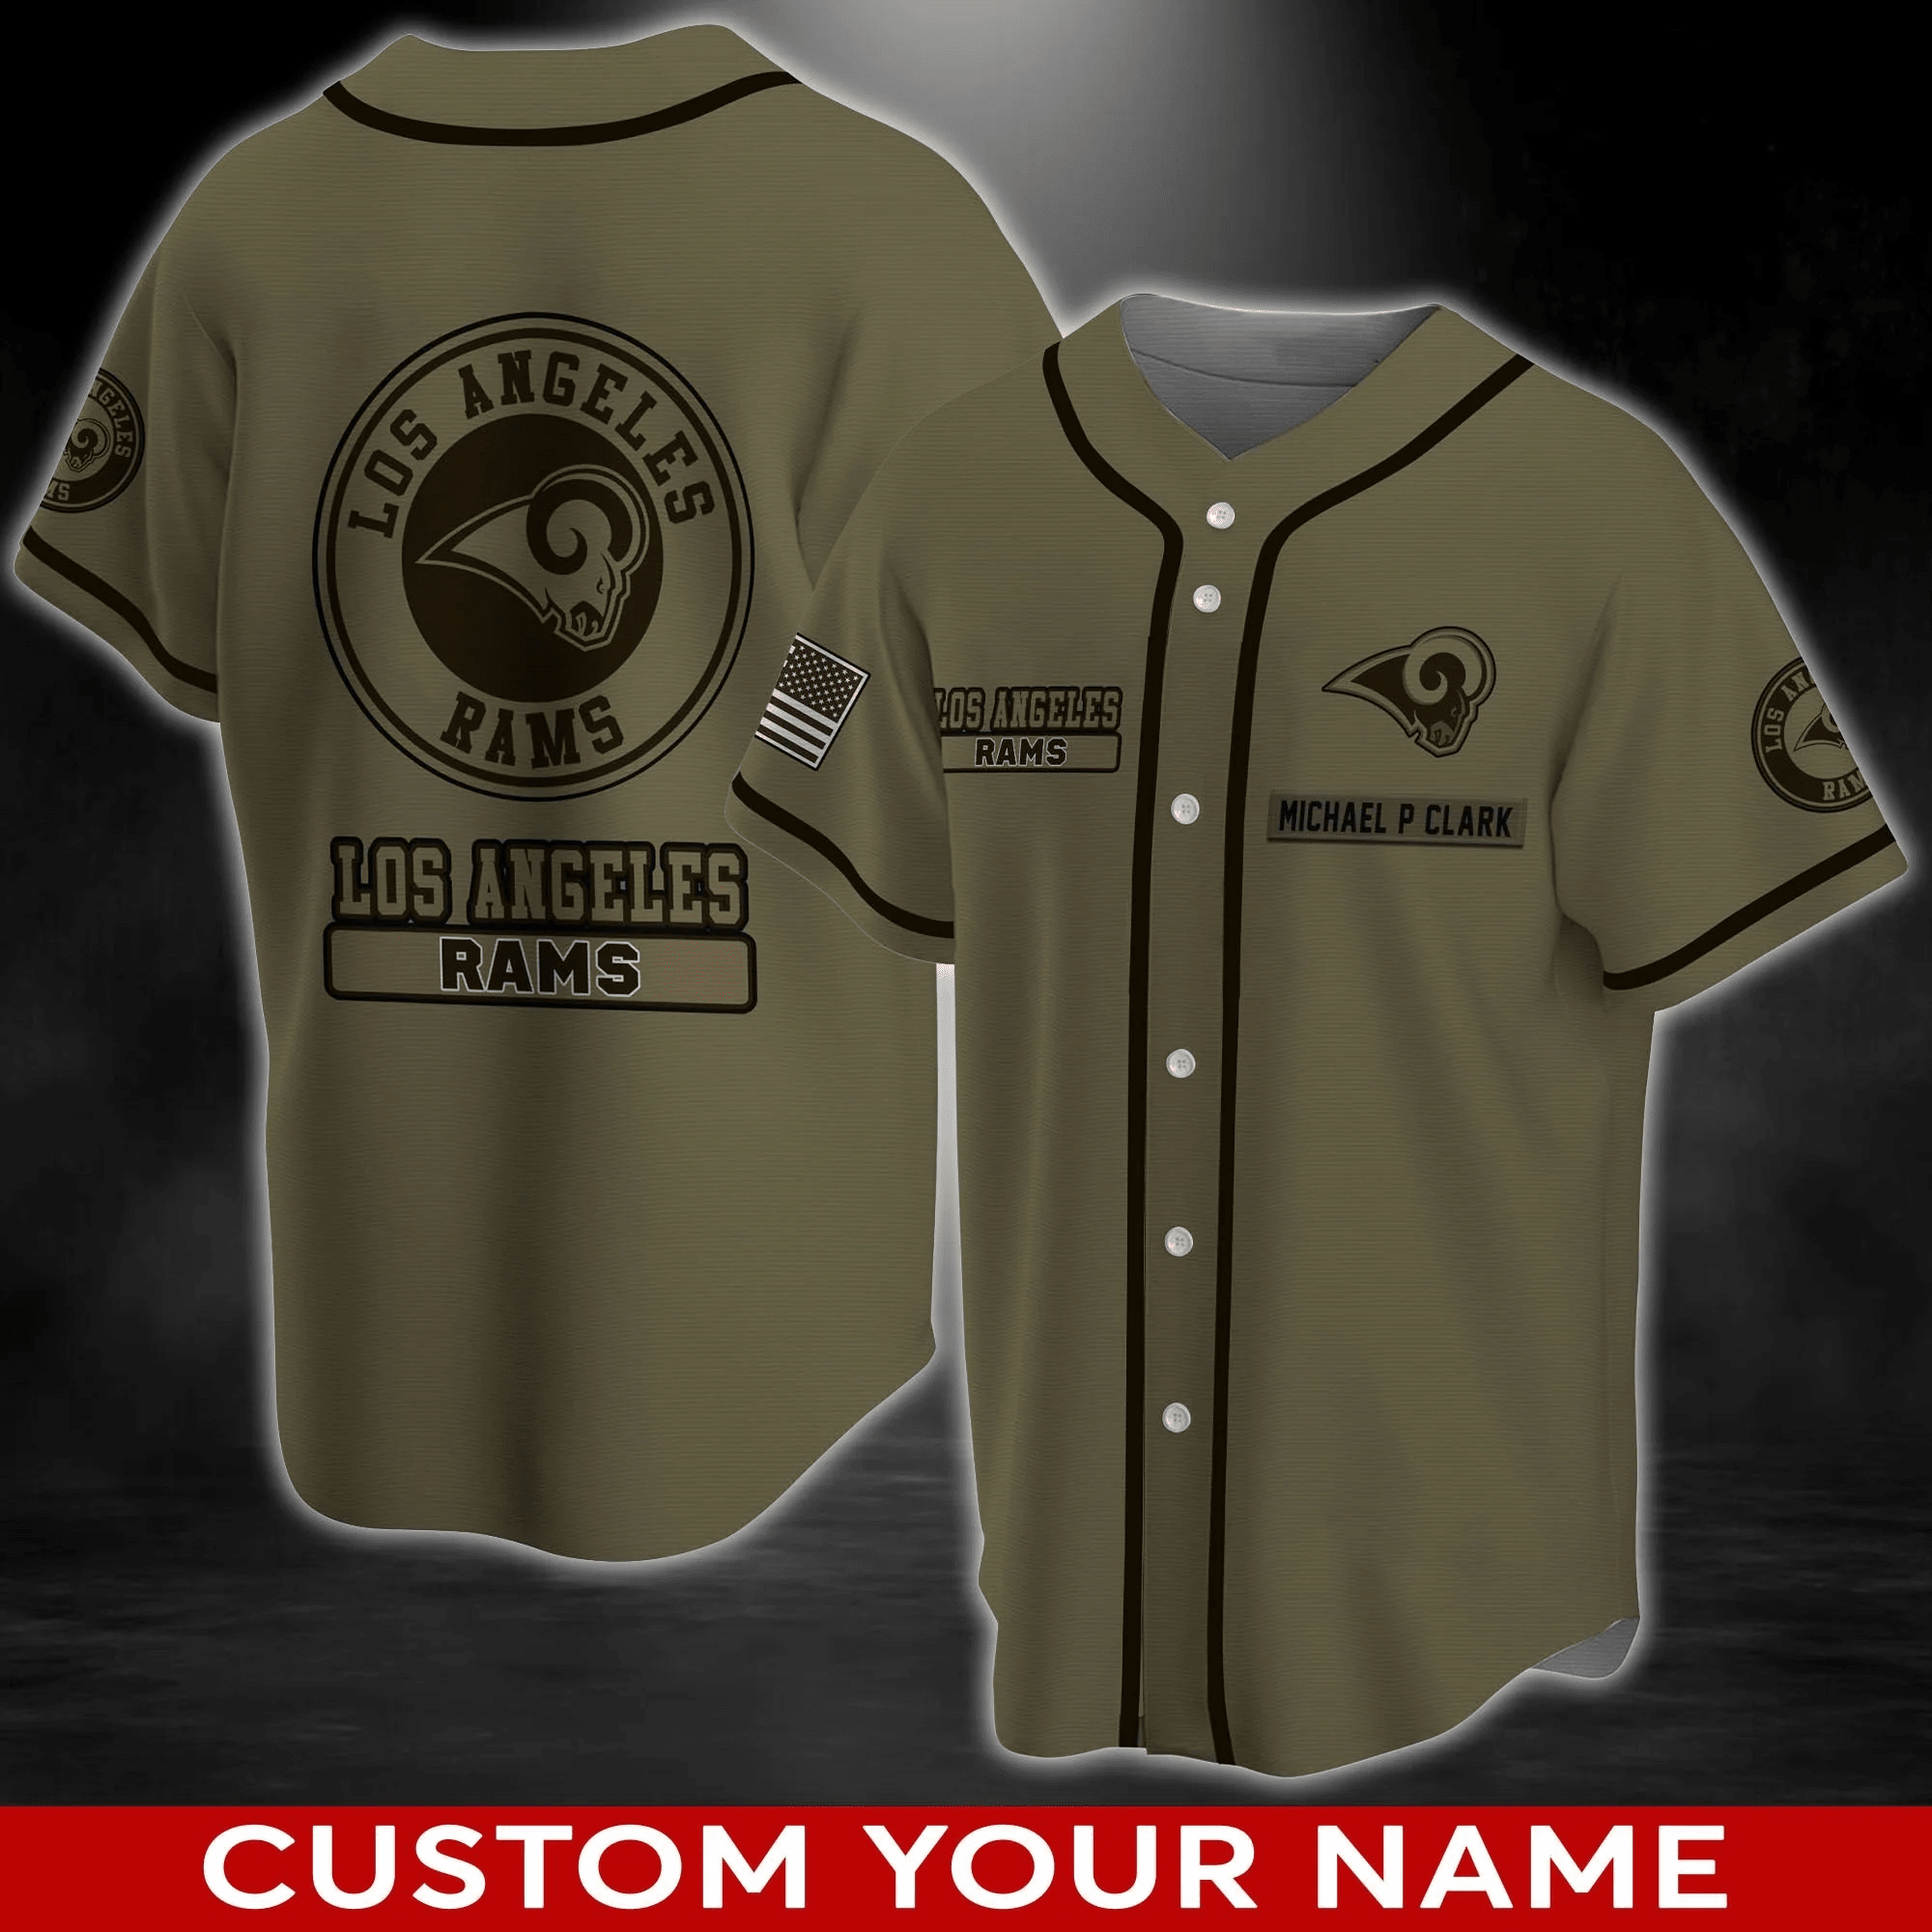 Los Angeles Rams NFL Personalized Custom Name Baseball Jersey Shirt